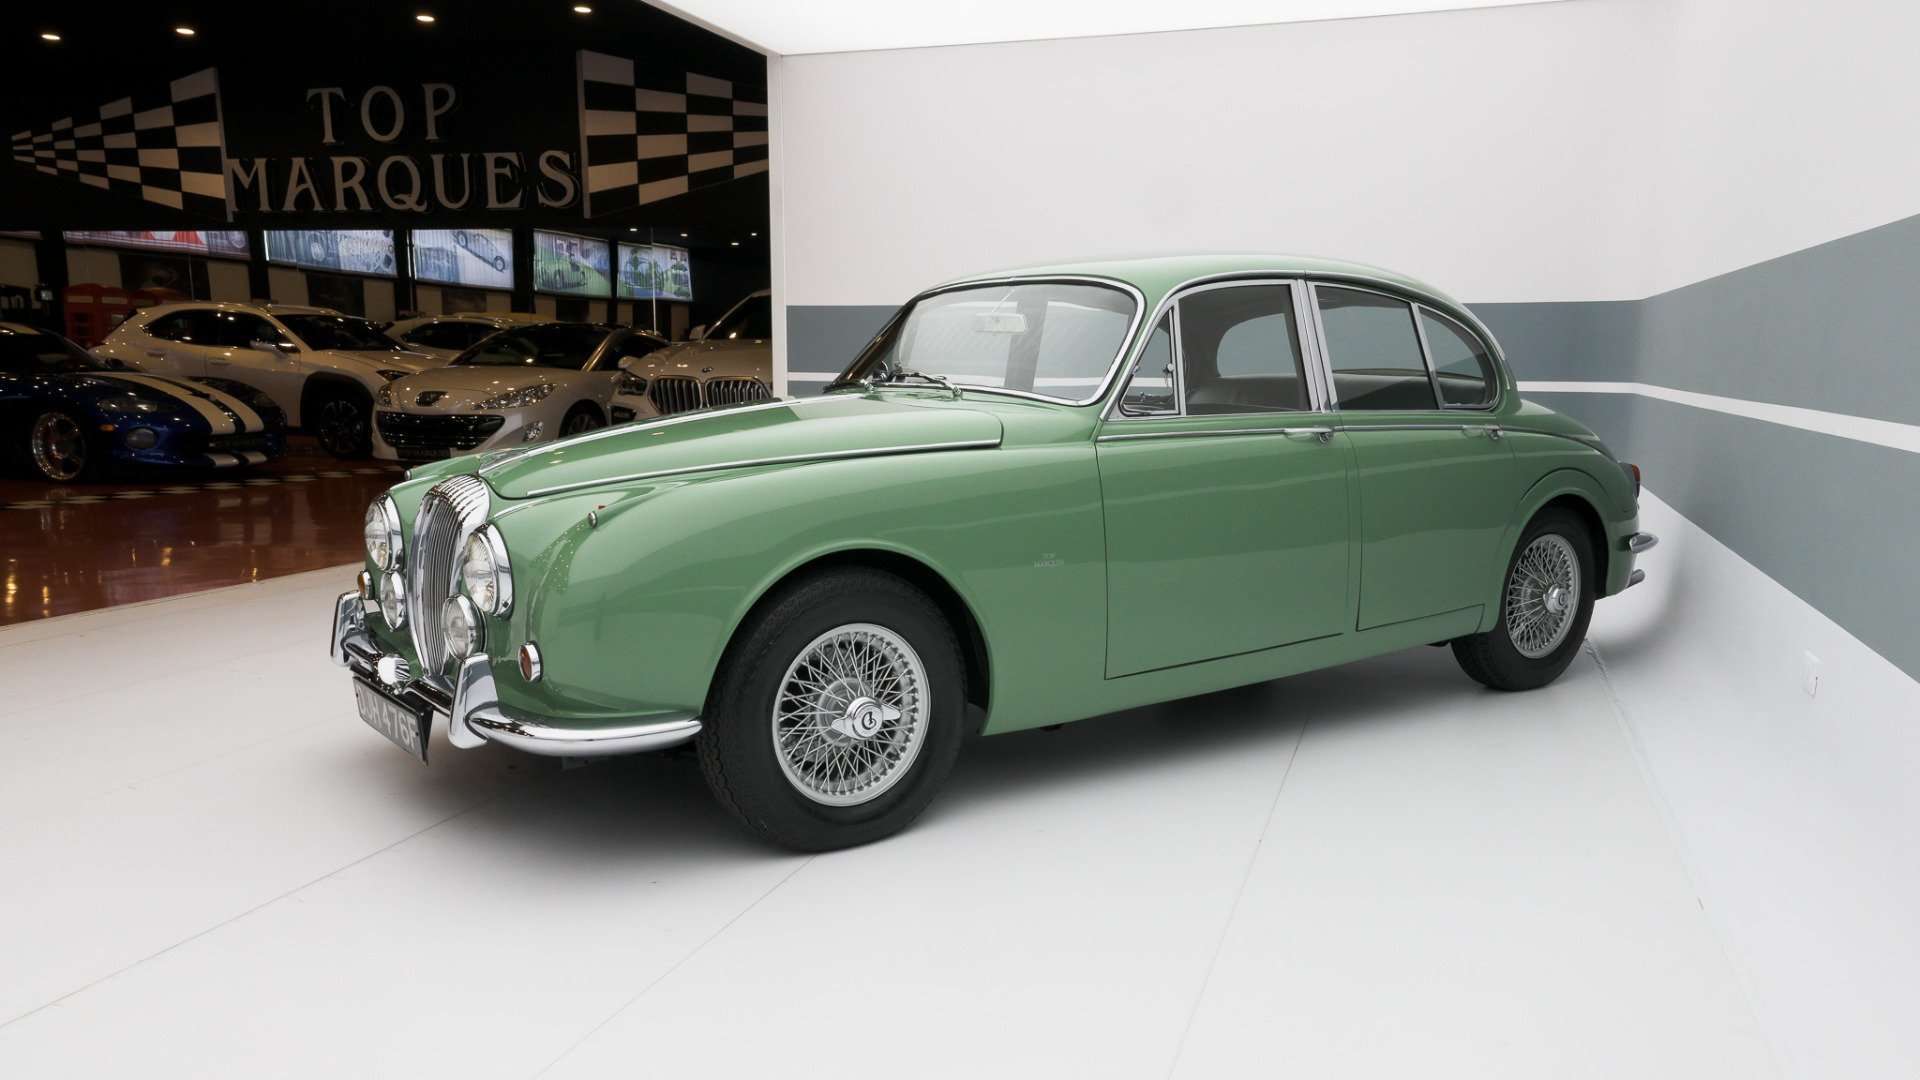 Daimler Sovereign Sedan in Green used in Bassano del Grappa - Vicenza - Vi for € 29,950.-